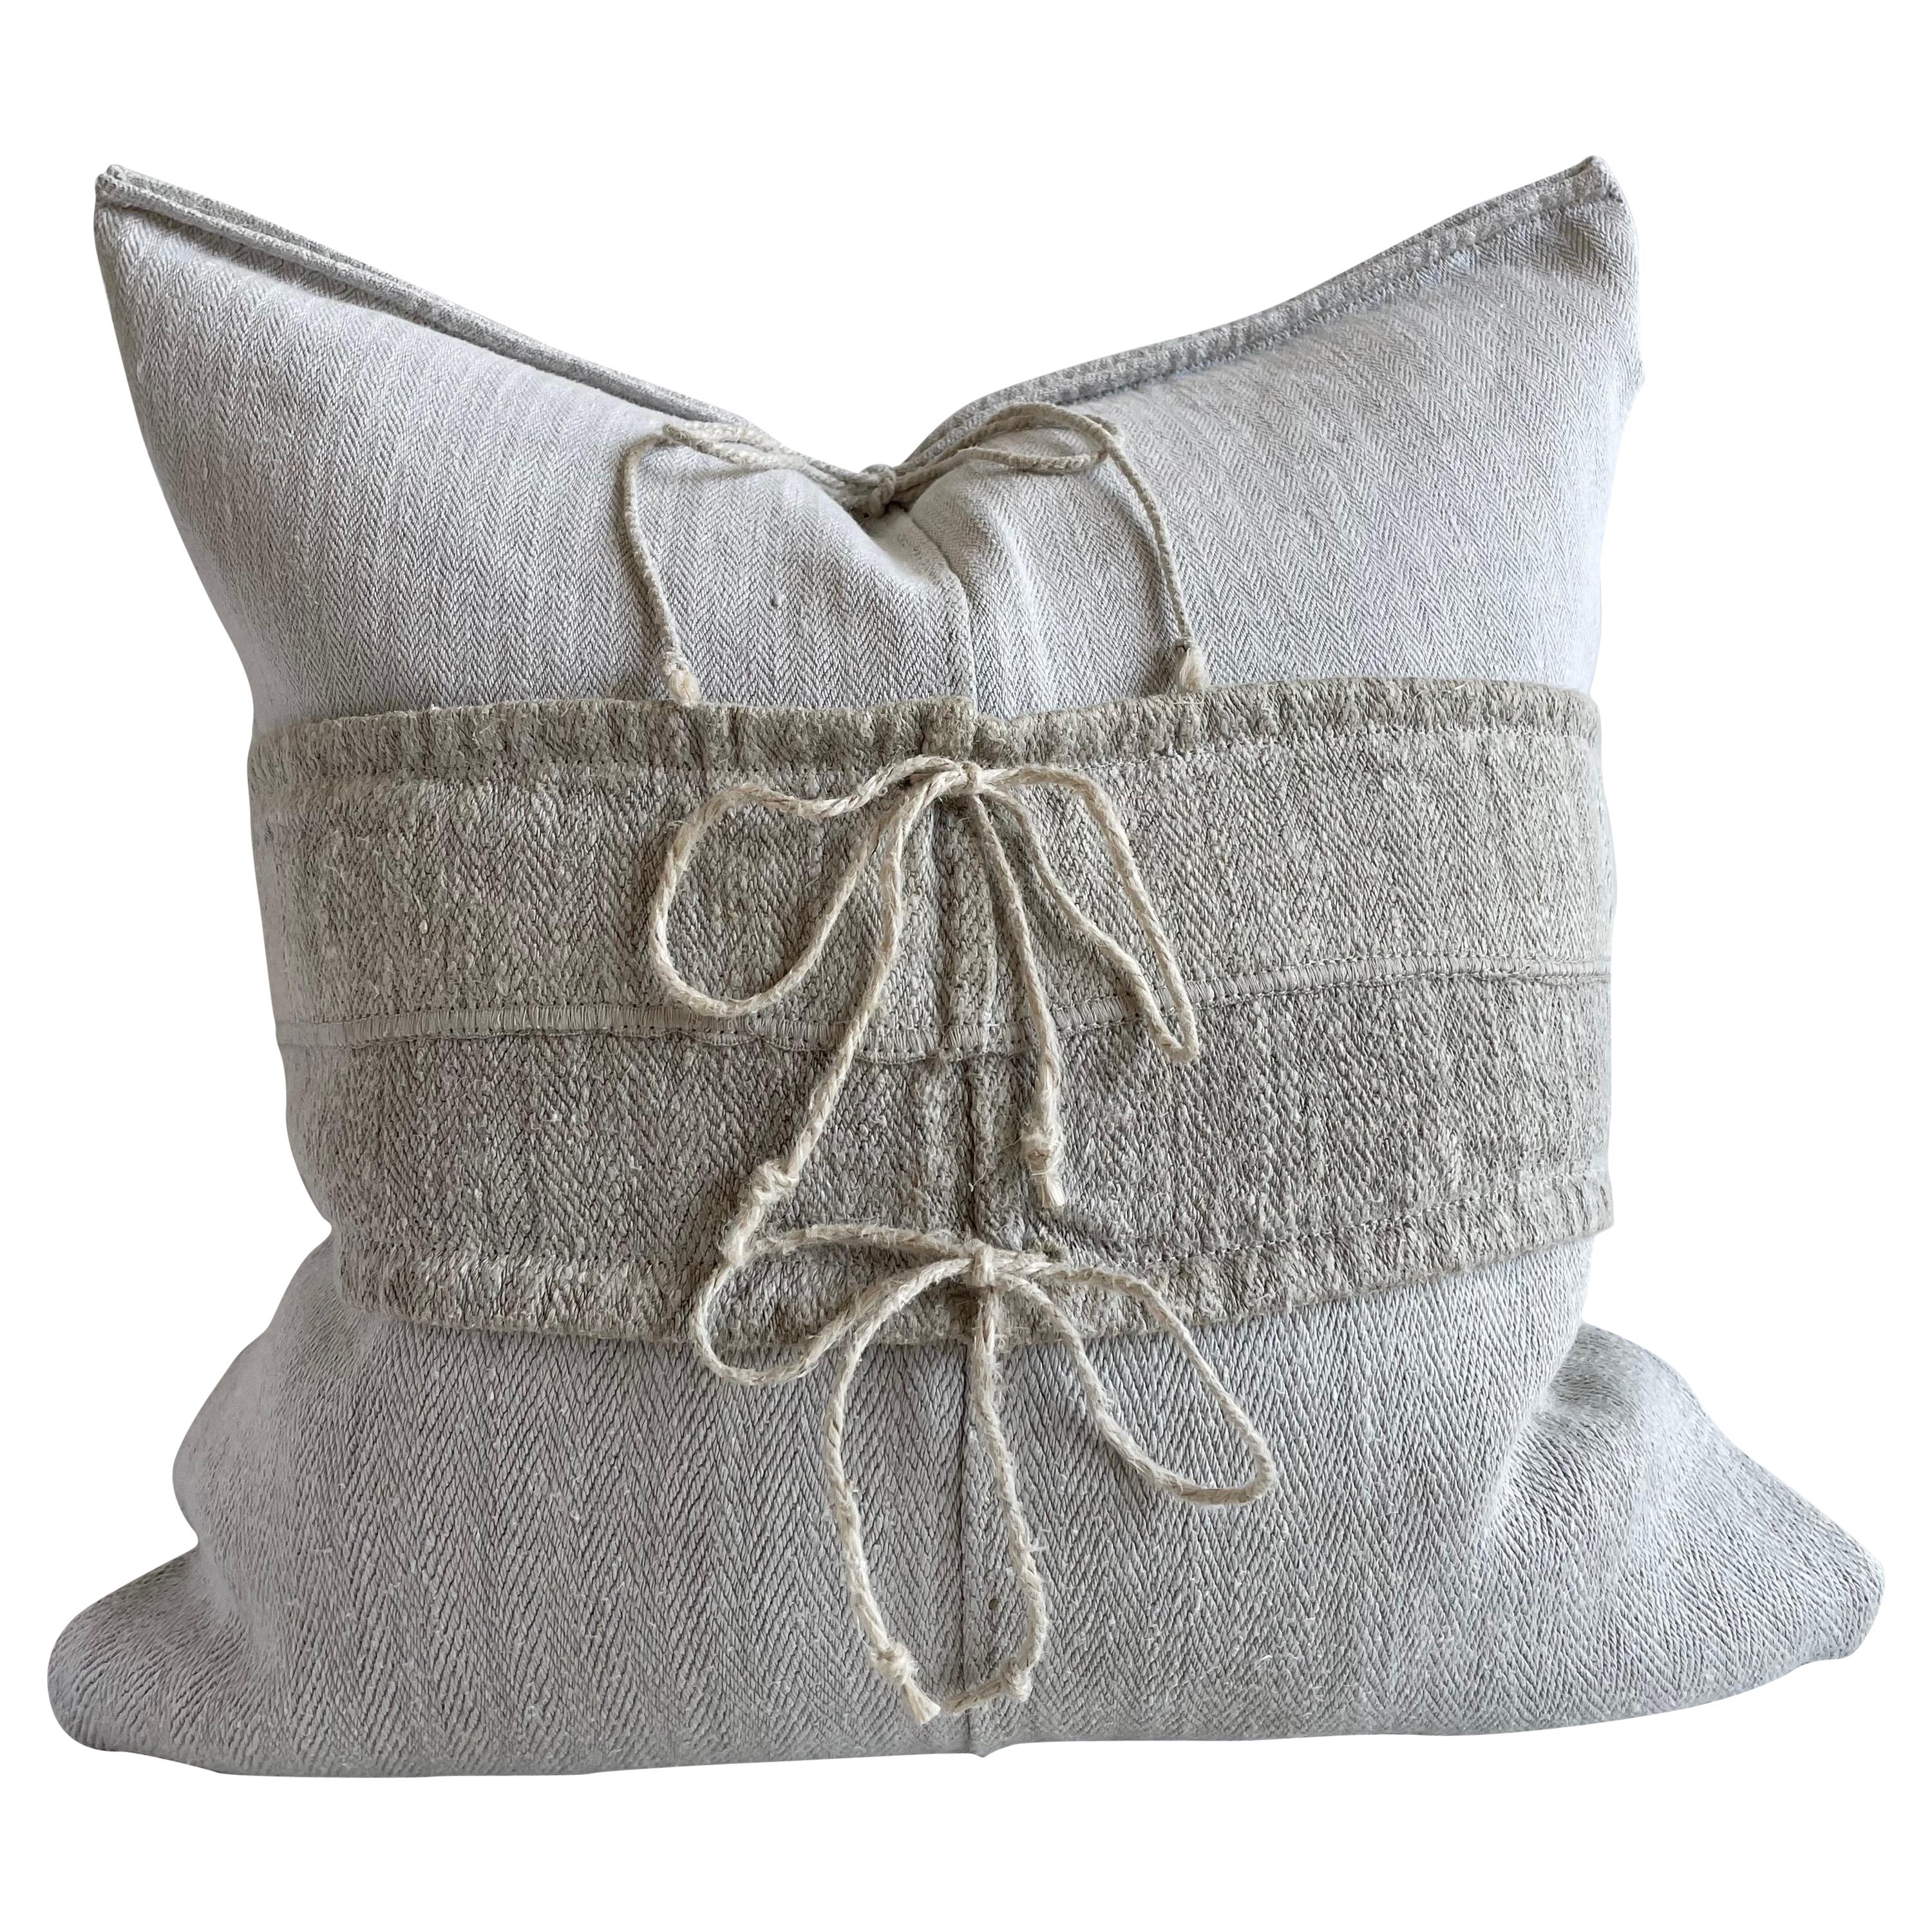 Vintage European Grain Sack Pillow mit Einsatz